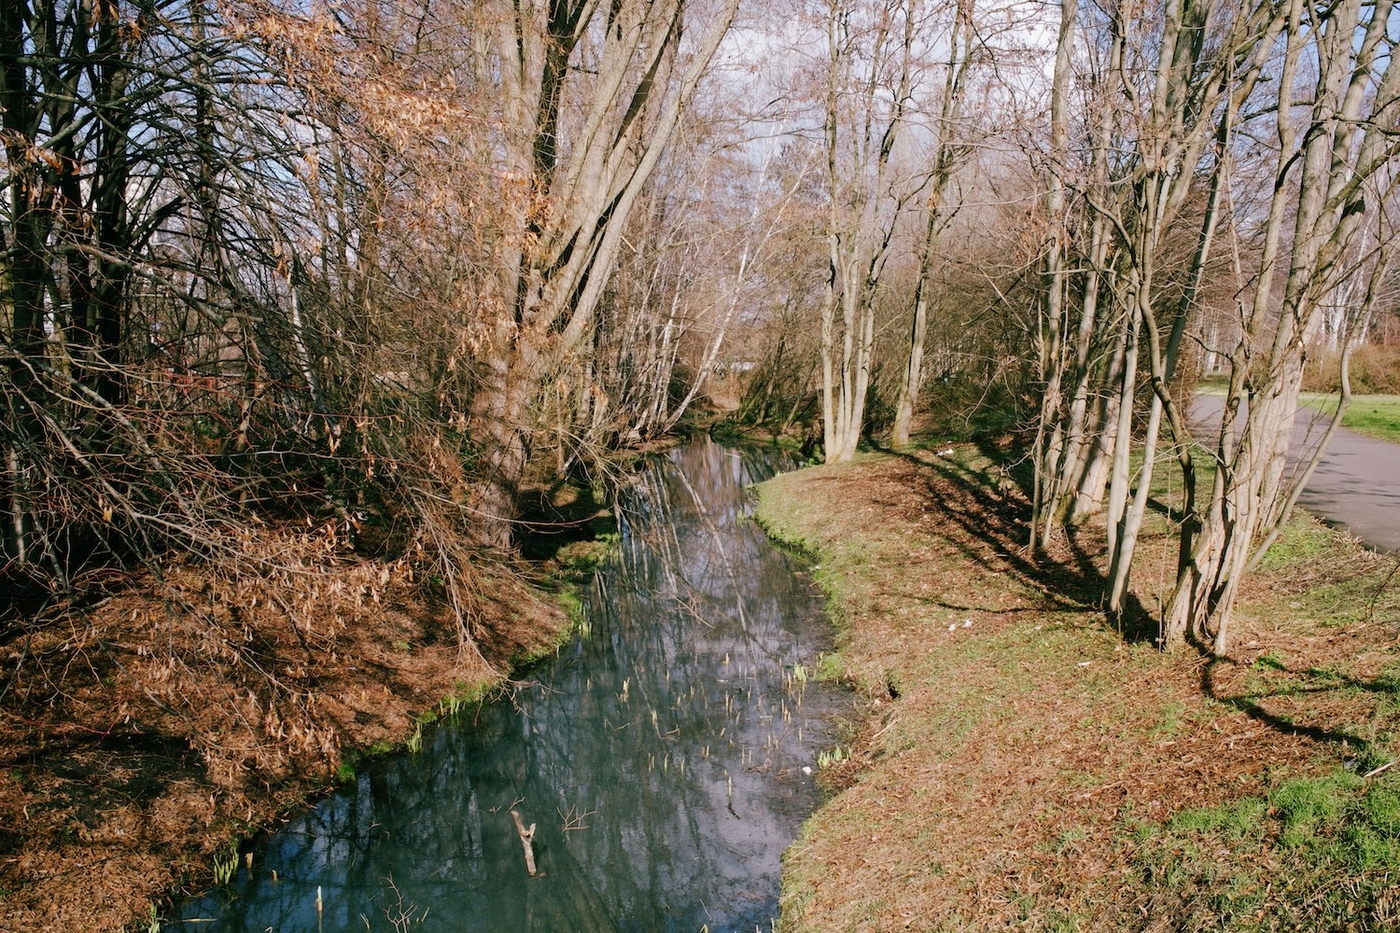 A small stream in a city park